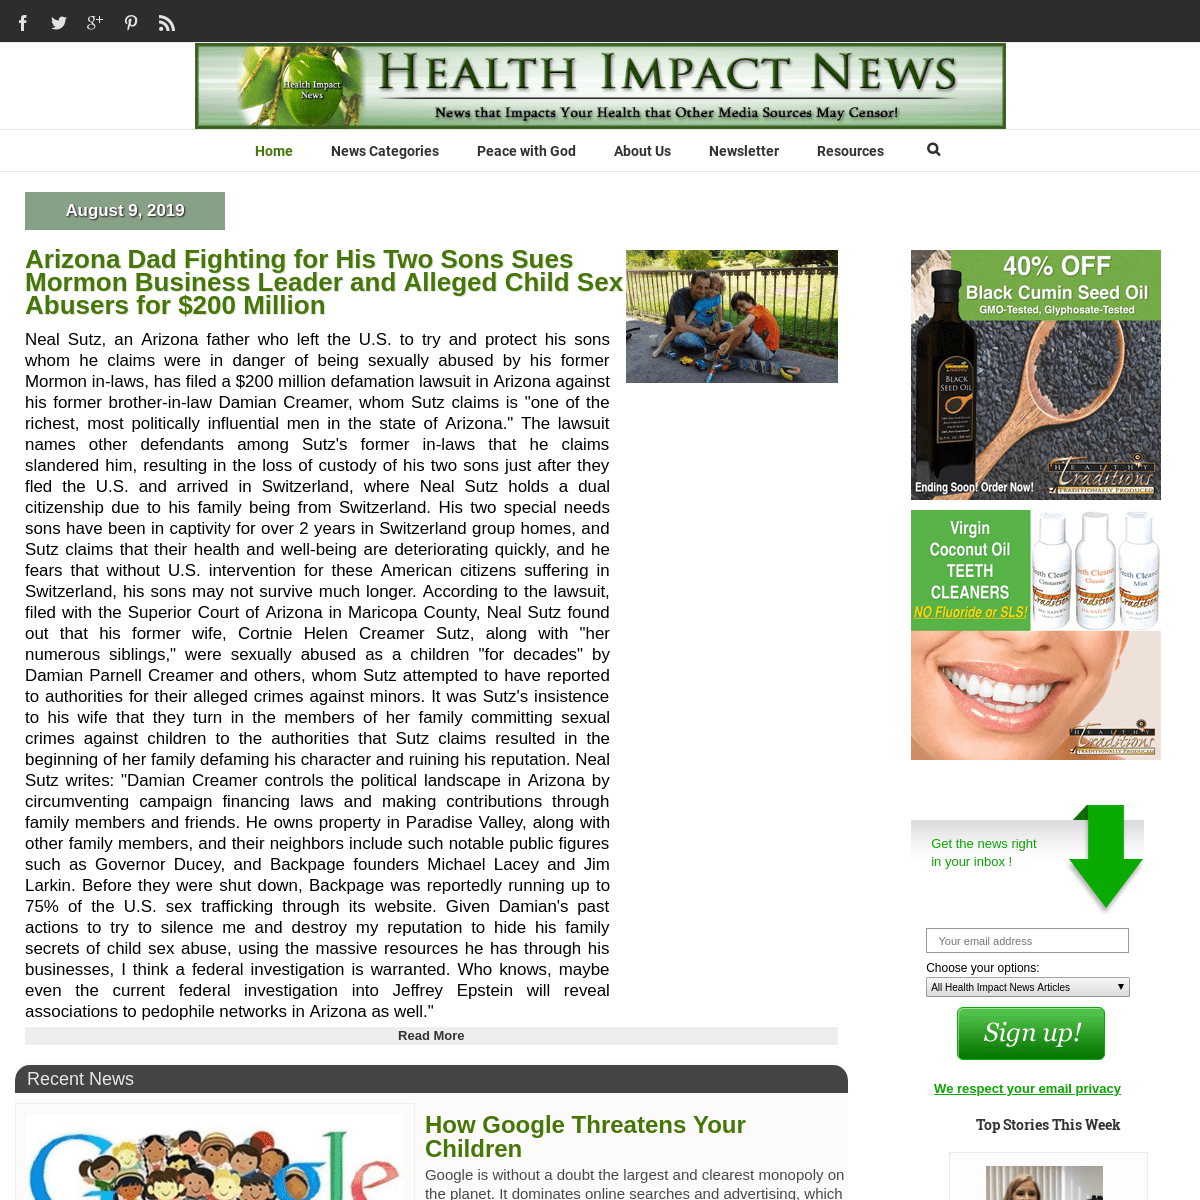 Health Impact News